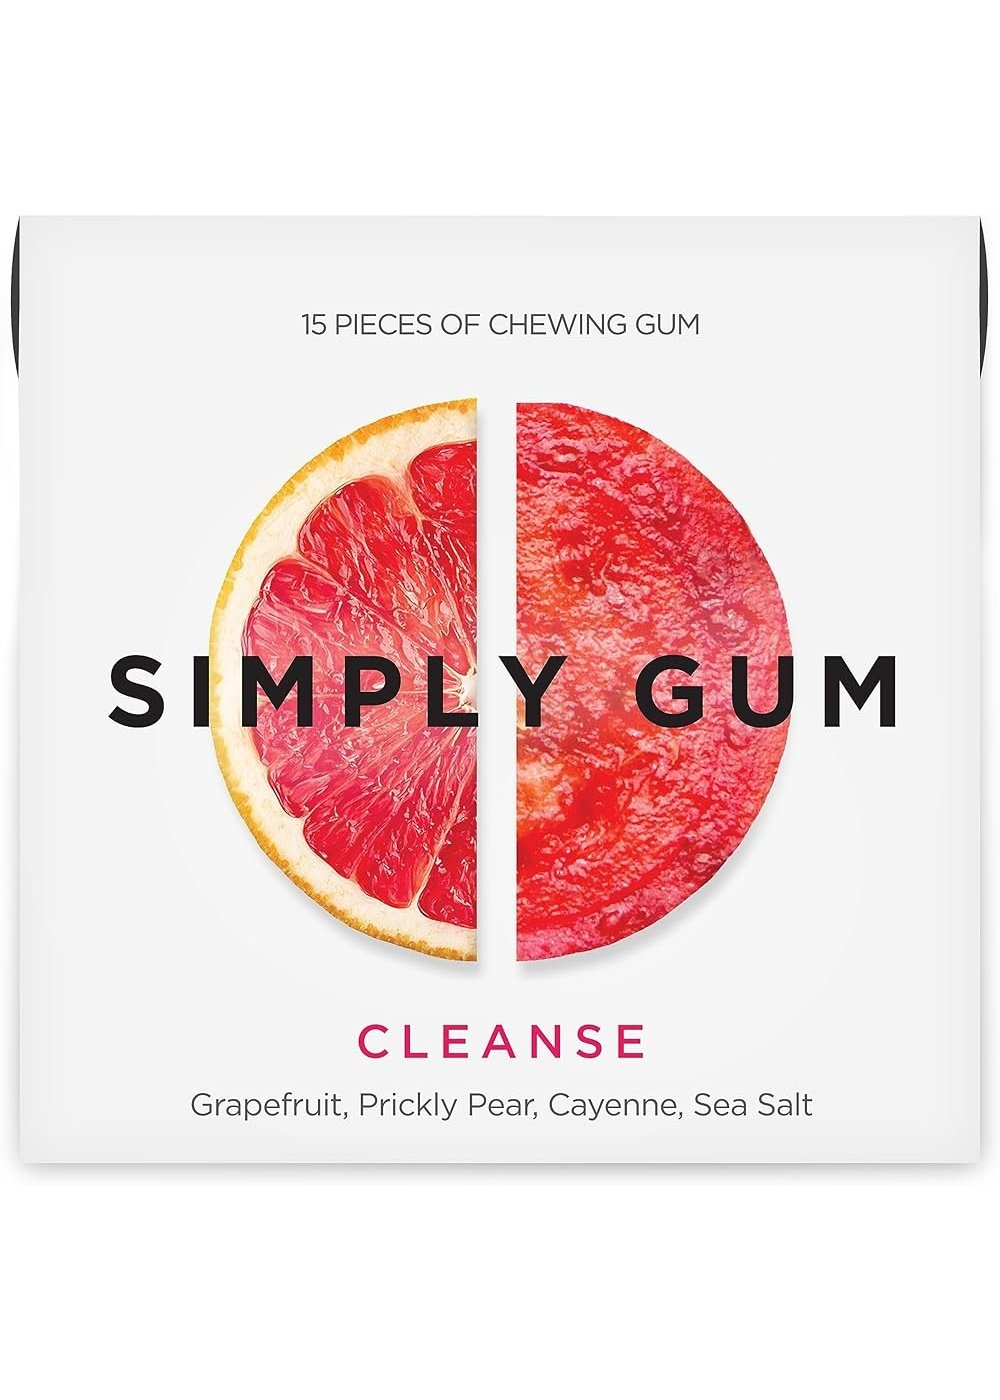 SIMPLY GUM Cleanse Grapefruit